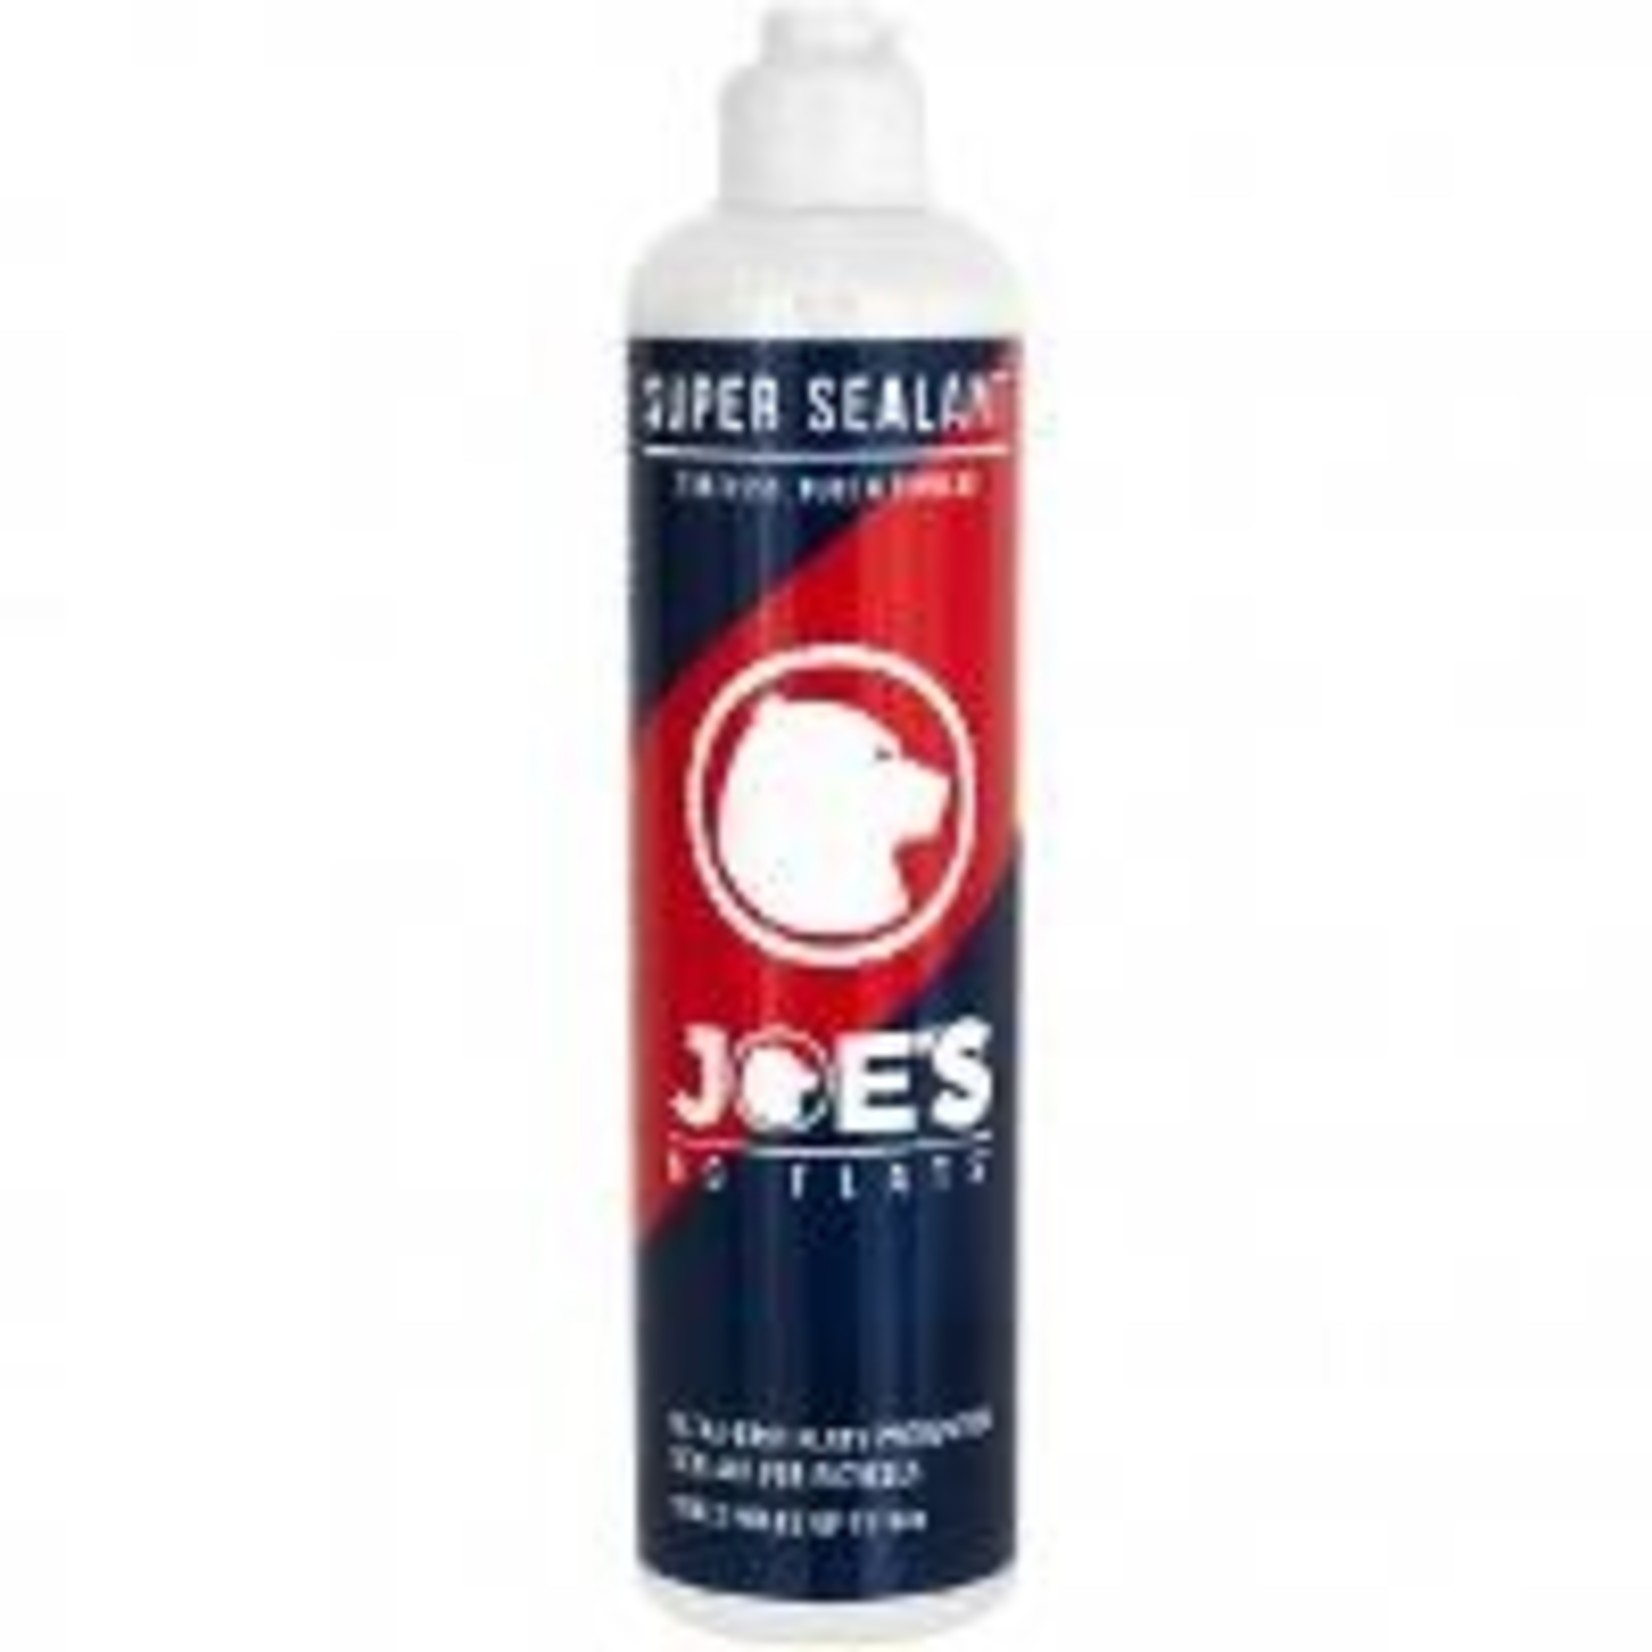 Joes Joes No Flats Super Sealant 500mL - Latex Based, Ultra-Fast Holes Up To 6mm